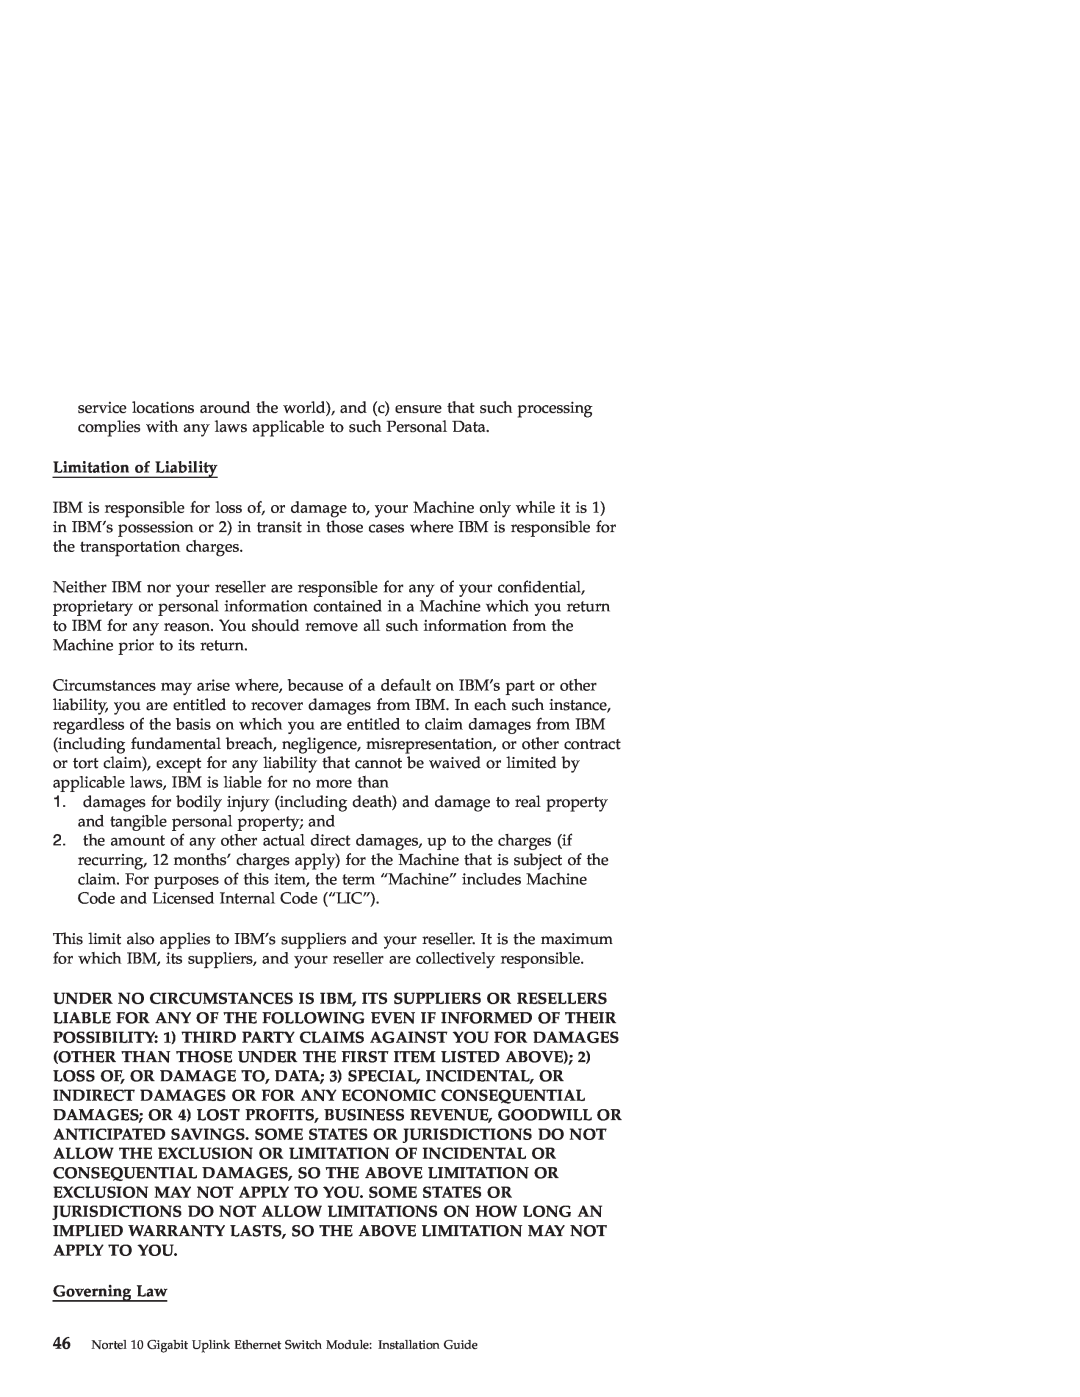 IBM Nortel 10 manual Limitation of Liability, Governing Law 